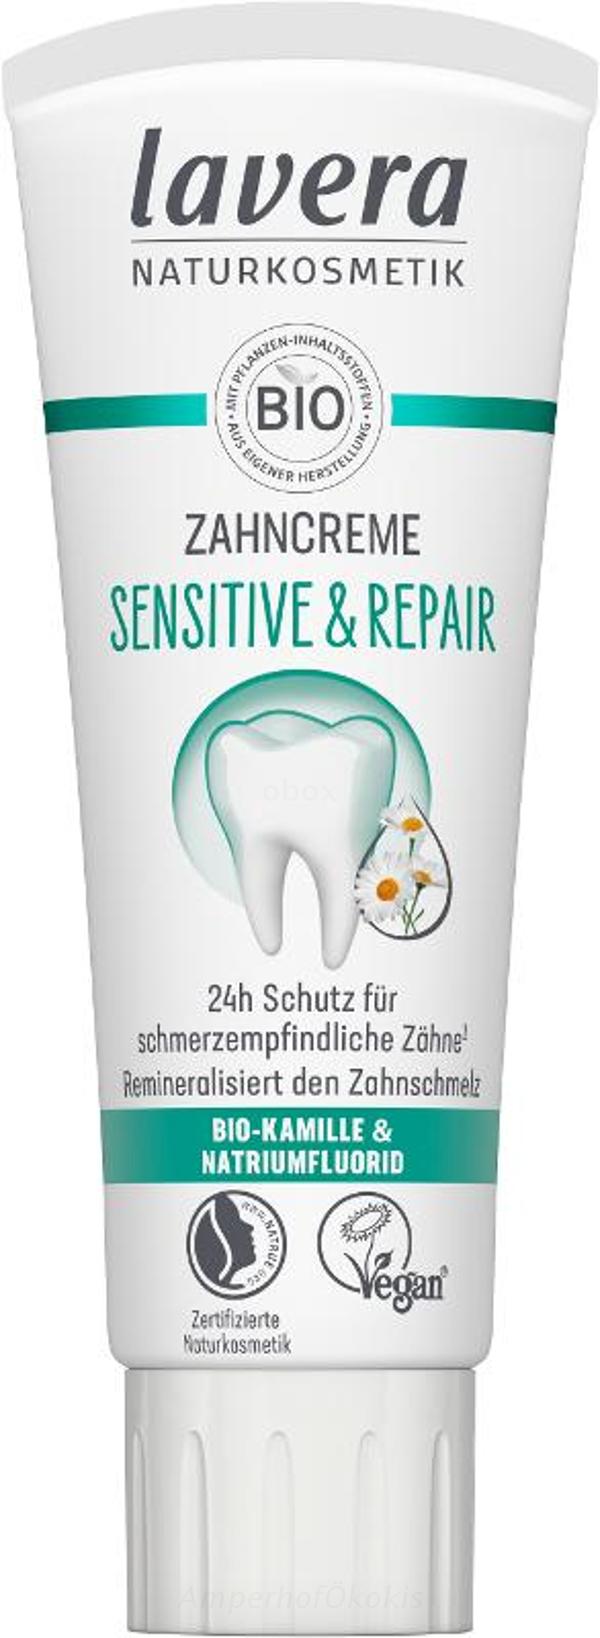 Produktfoto zu Zahncreme Sensitiv Repair 75 ml